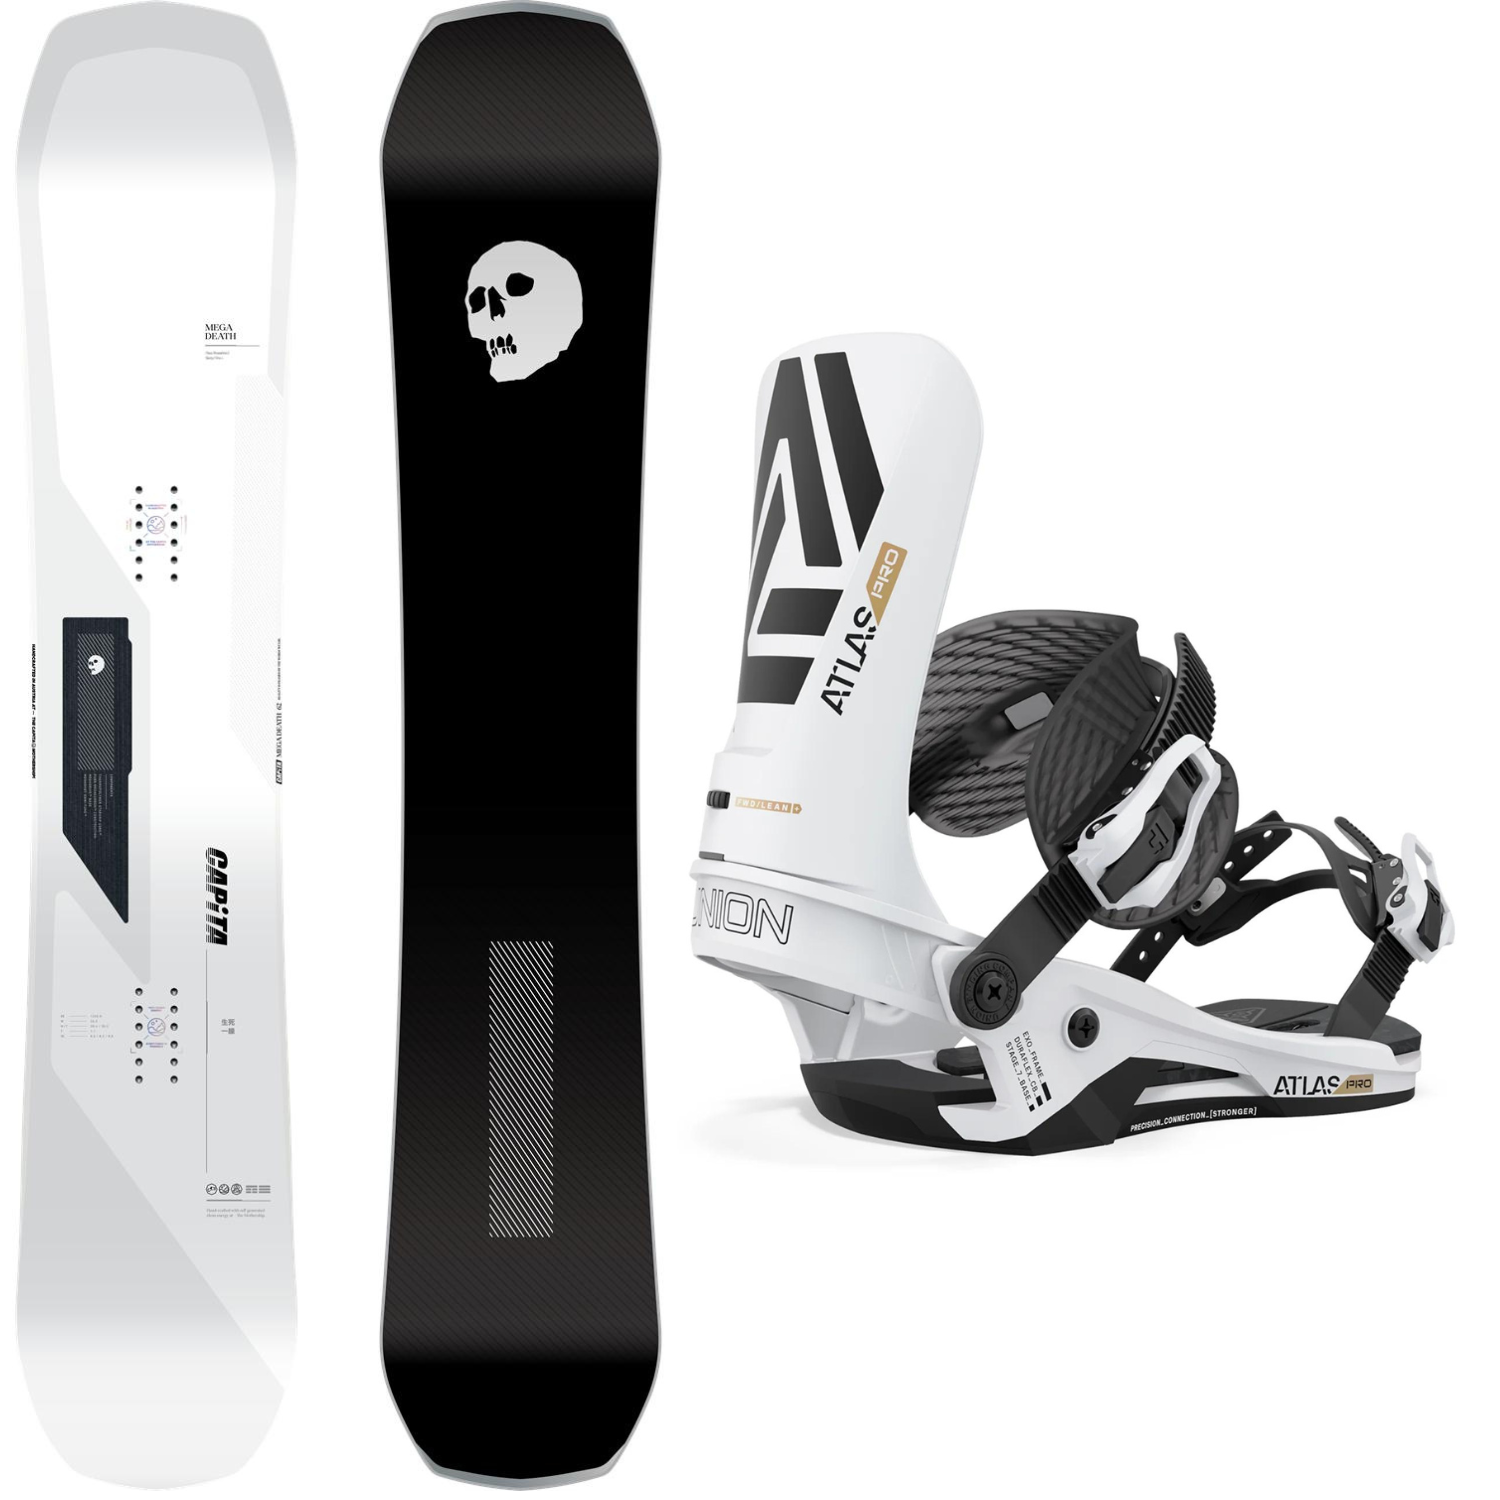 Blauer Board Shop Snowboard Packages